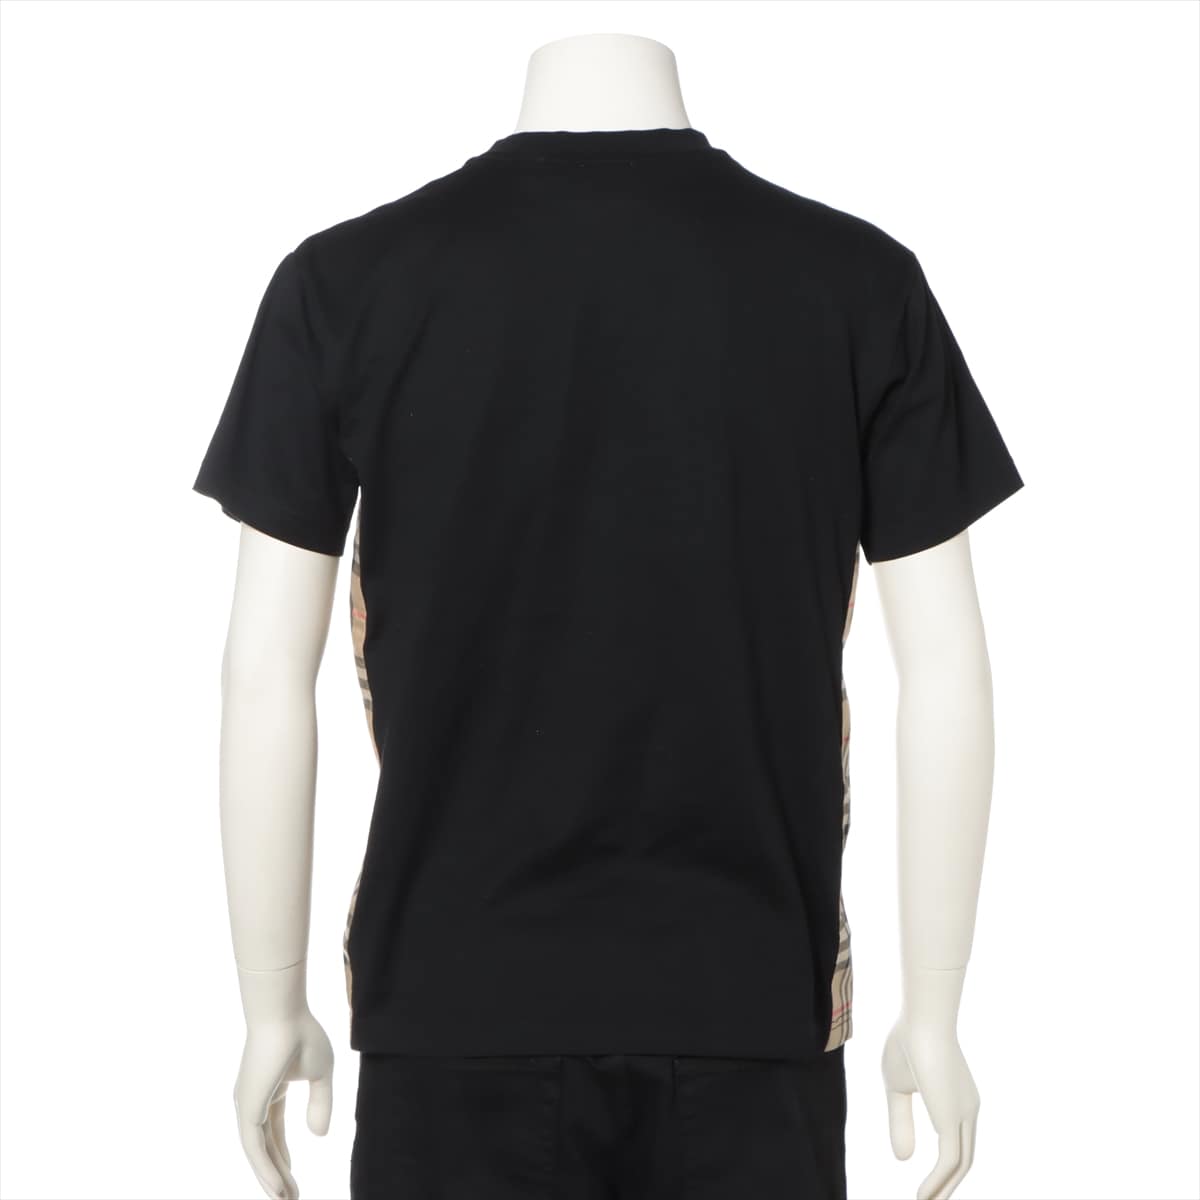 Burberry Nova Check Cotton T-shirt XXS Men's Black